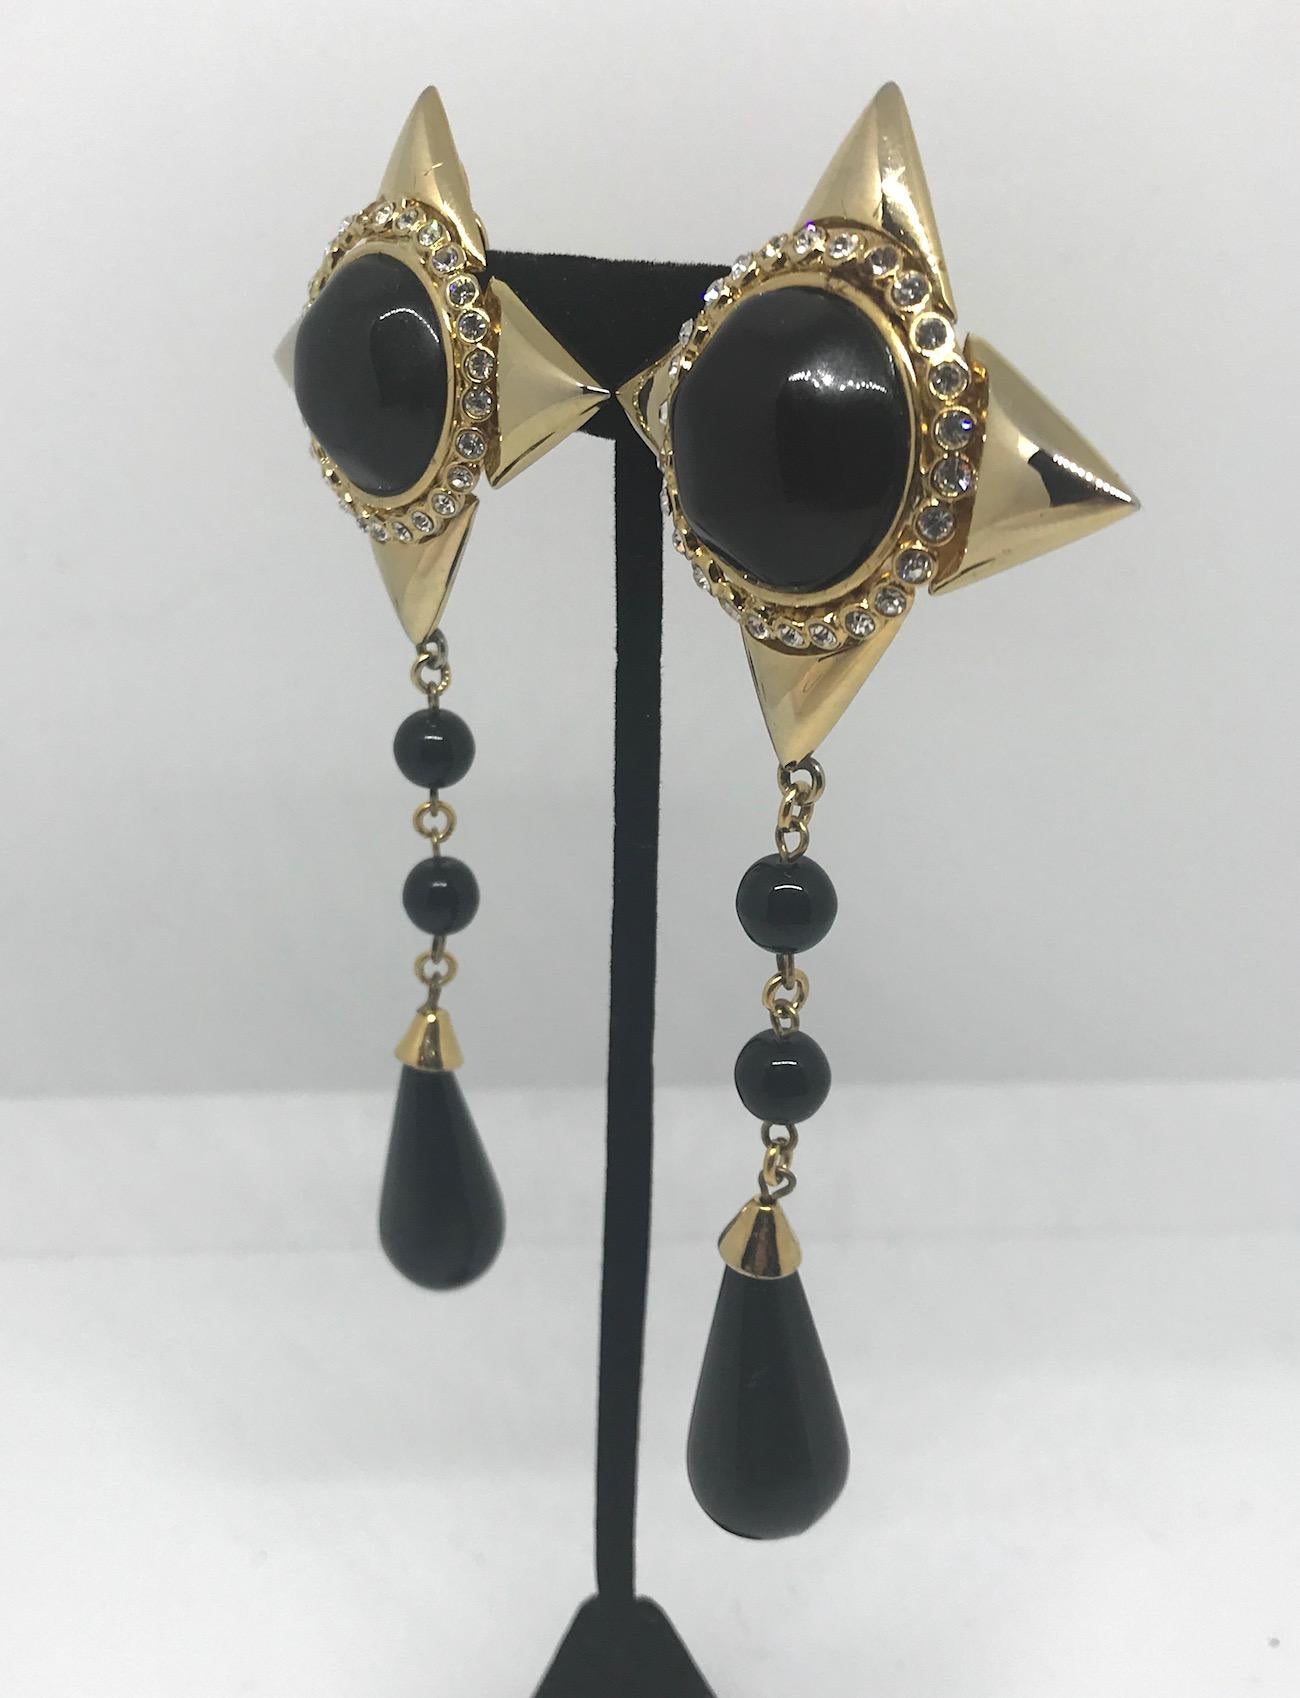 Women's De Liguoro 1980s pendant earrings from Elsa Martinelli's collection